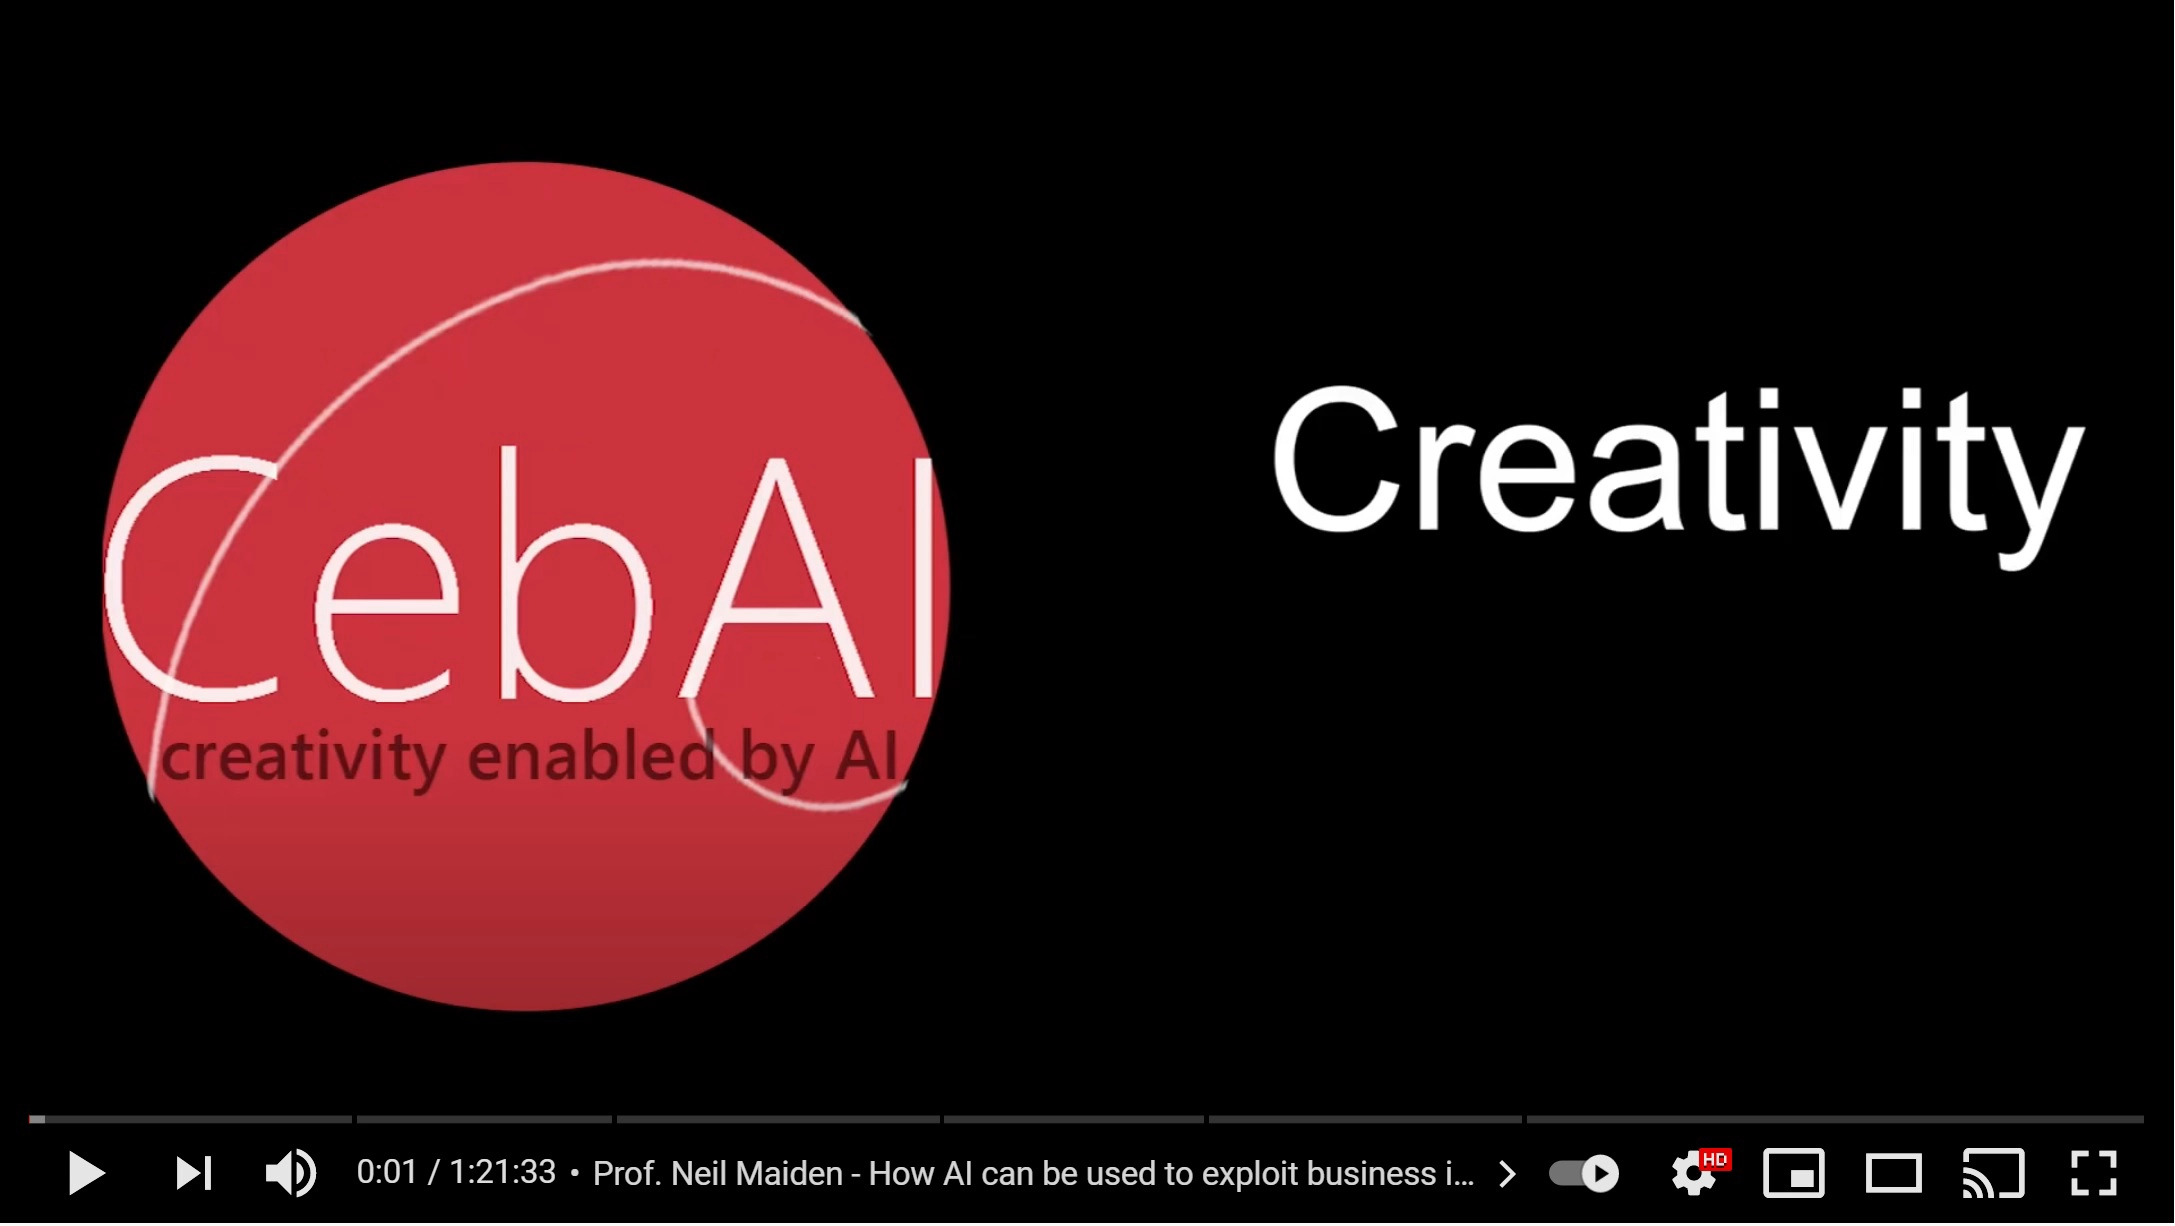 CebAI-Creativity